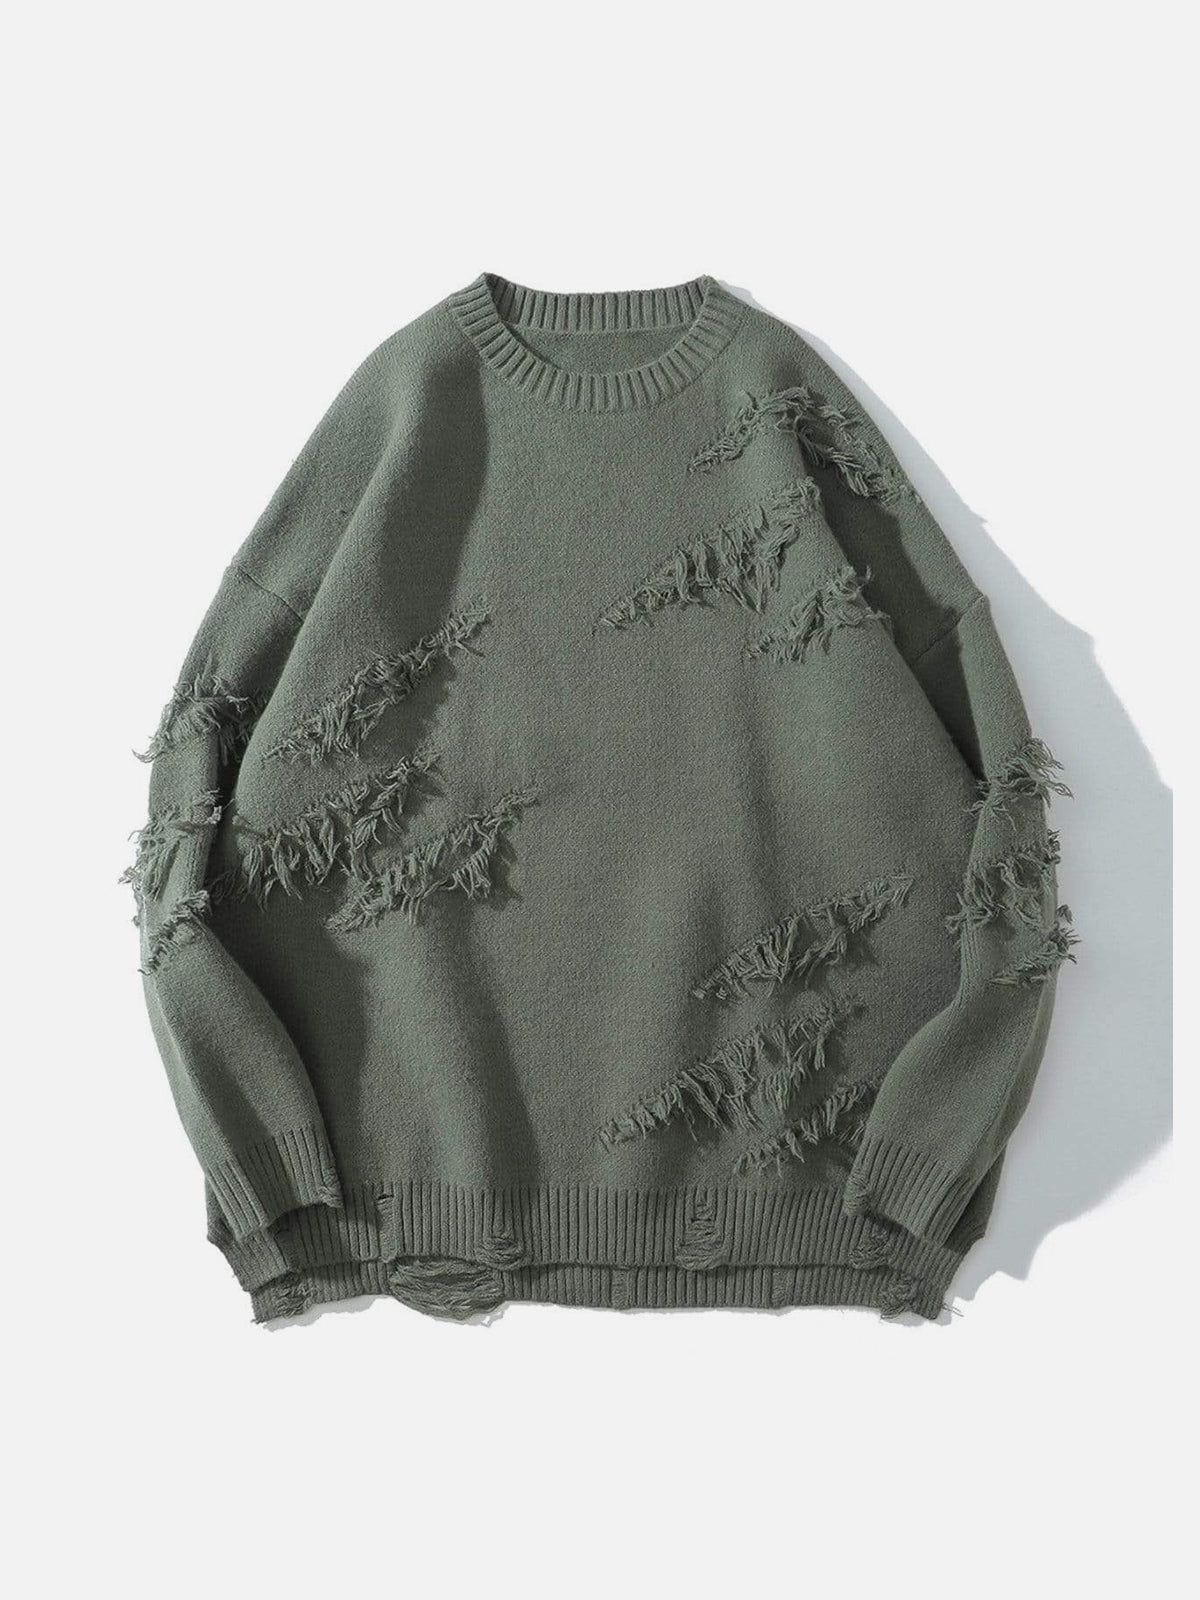 "Rwoiut" Fringed Design Sweater Streetwear Brand Techwear Combat Tactical YUGEN THEORY